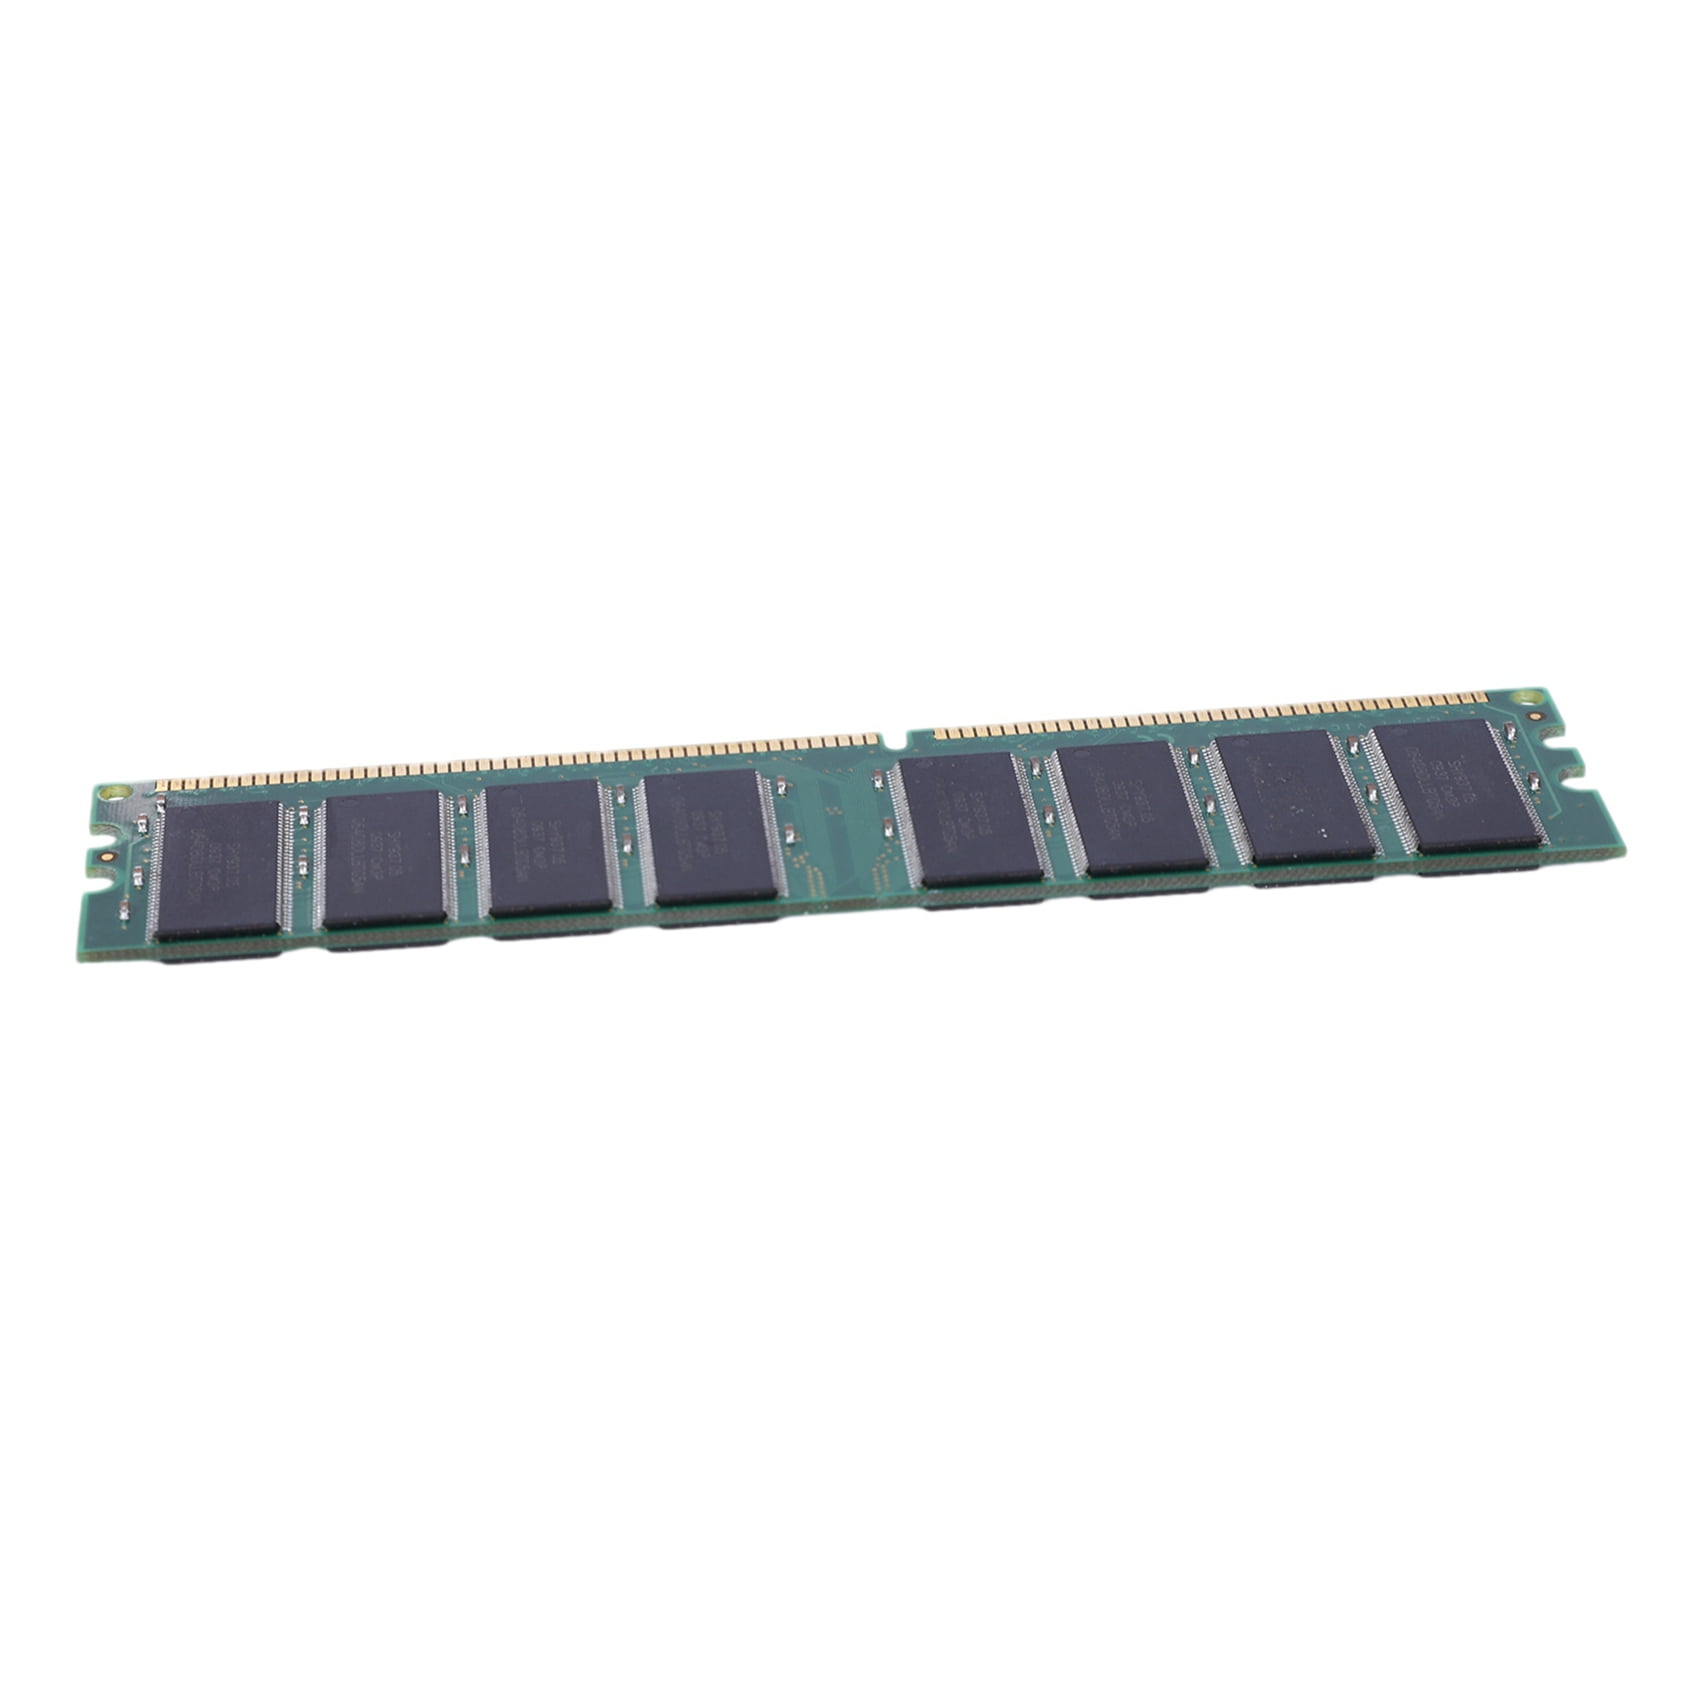 4X 2.6V DDR 400MHz Memory 184Pins PC3200 Desktop for RAM CPU GPU APU Non-ECC CL3 - Walmart.com